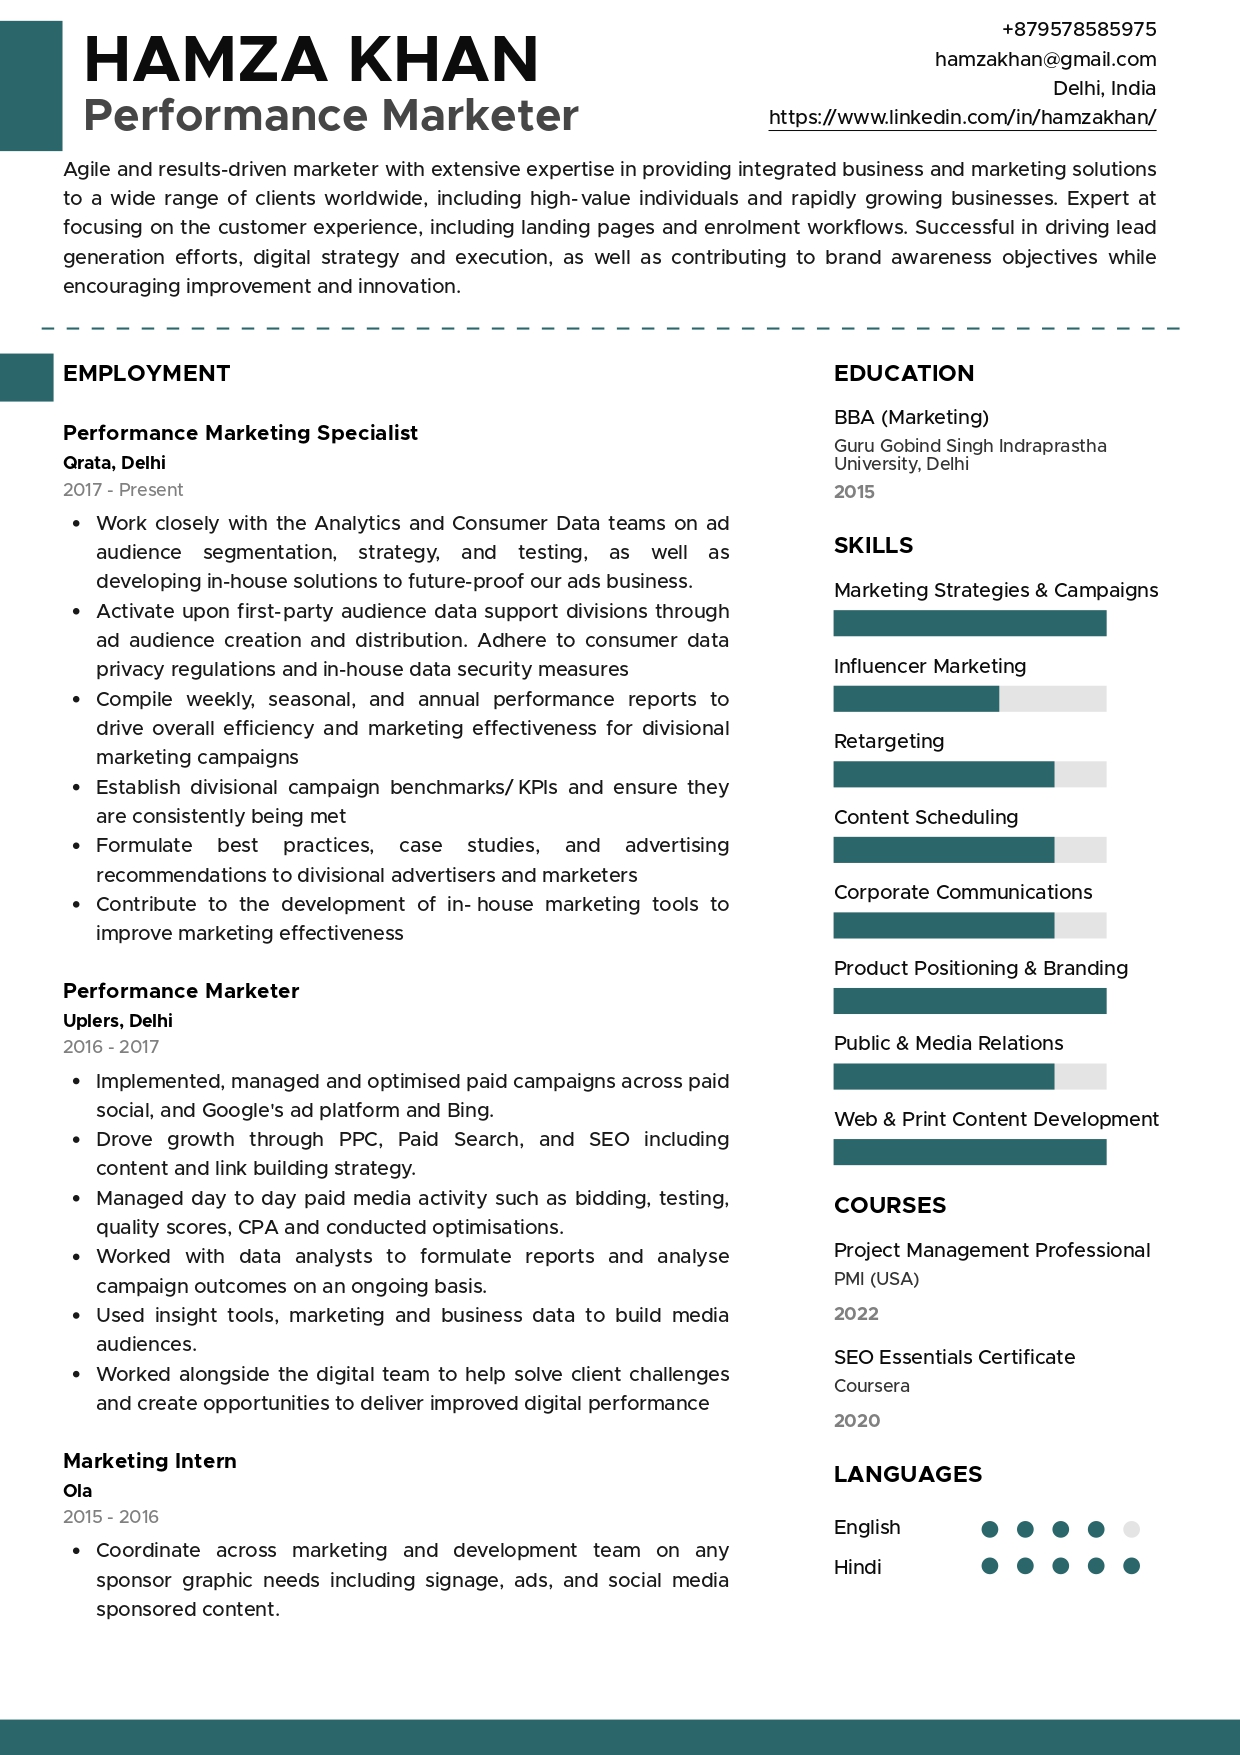 Resume of Performance Marketer